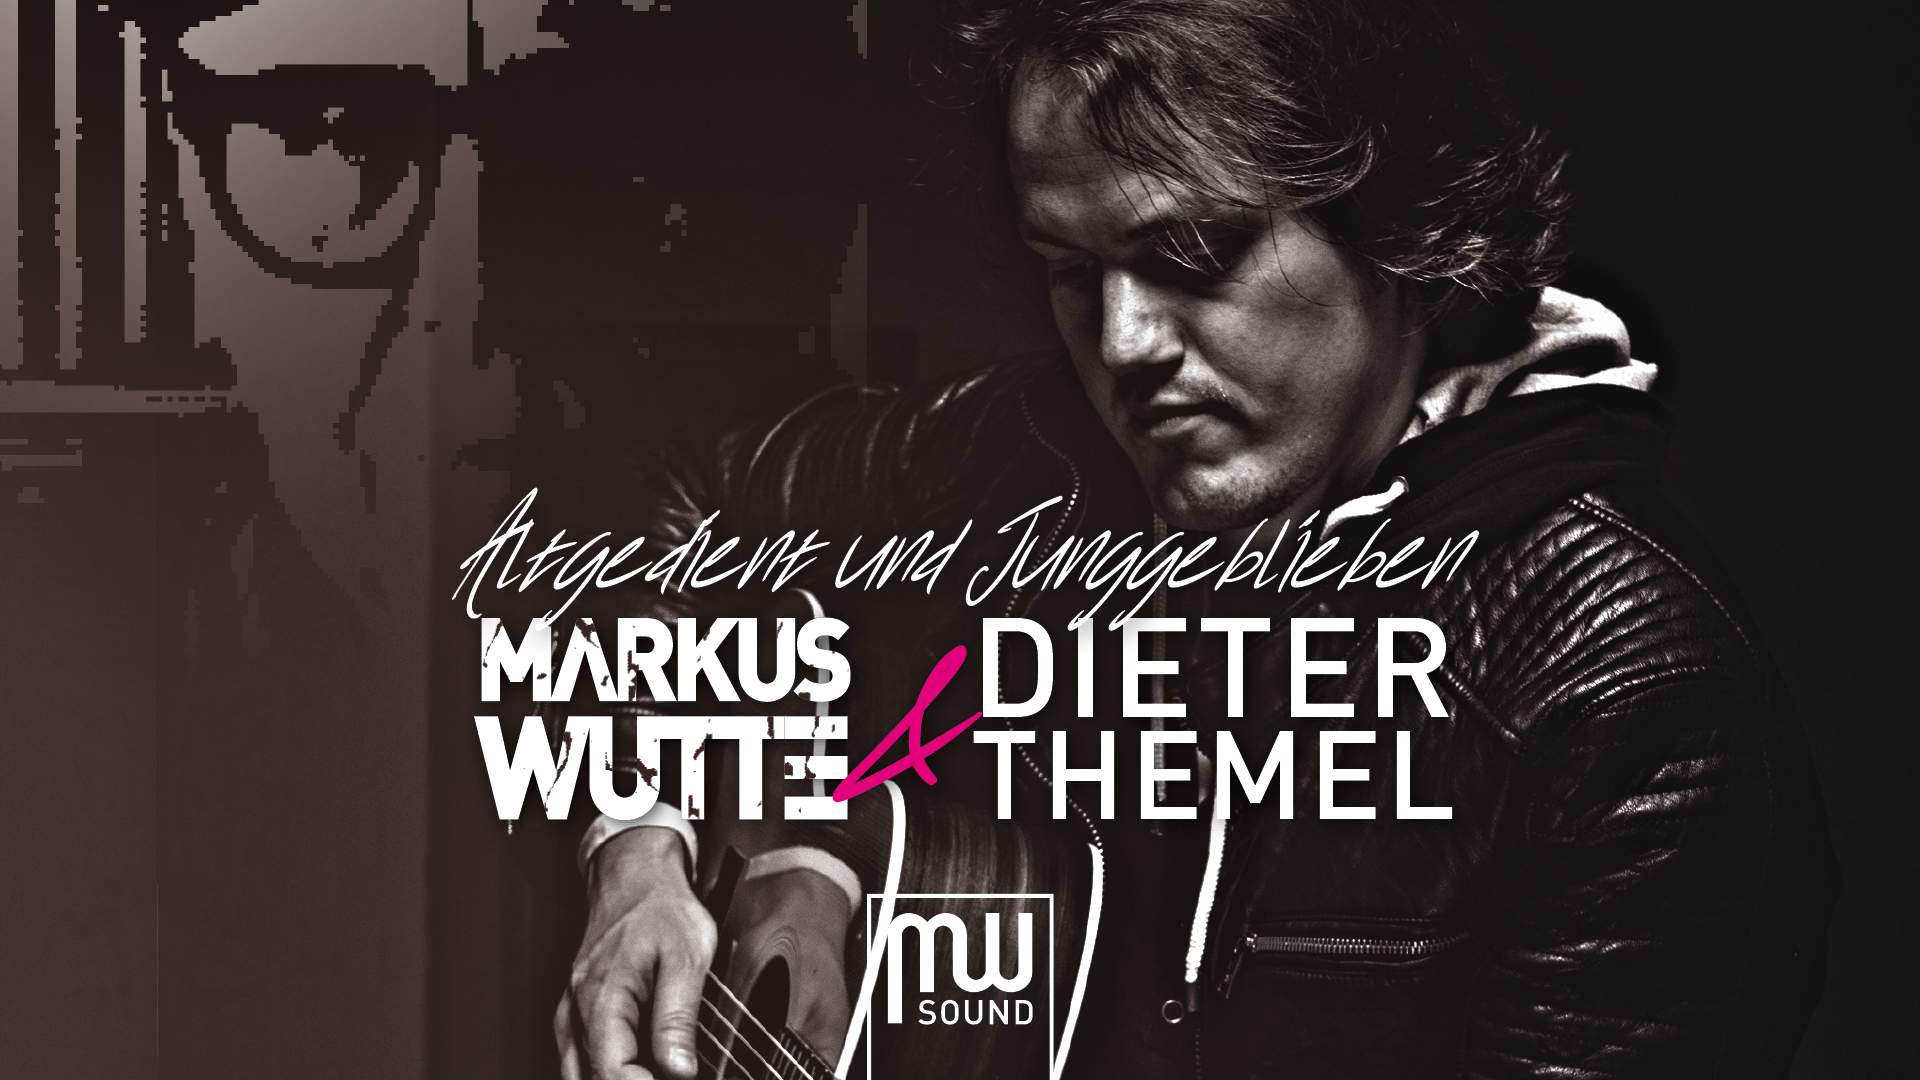 Duett: Markus Wutte & Dieter Themel - Altgedient und Junggeblieben.